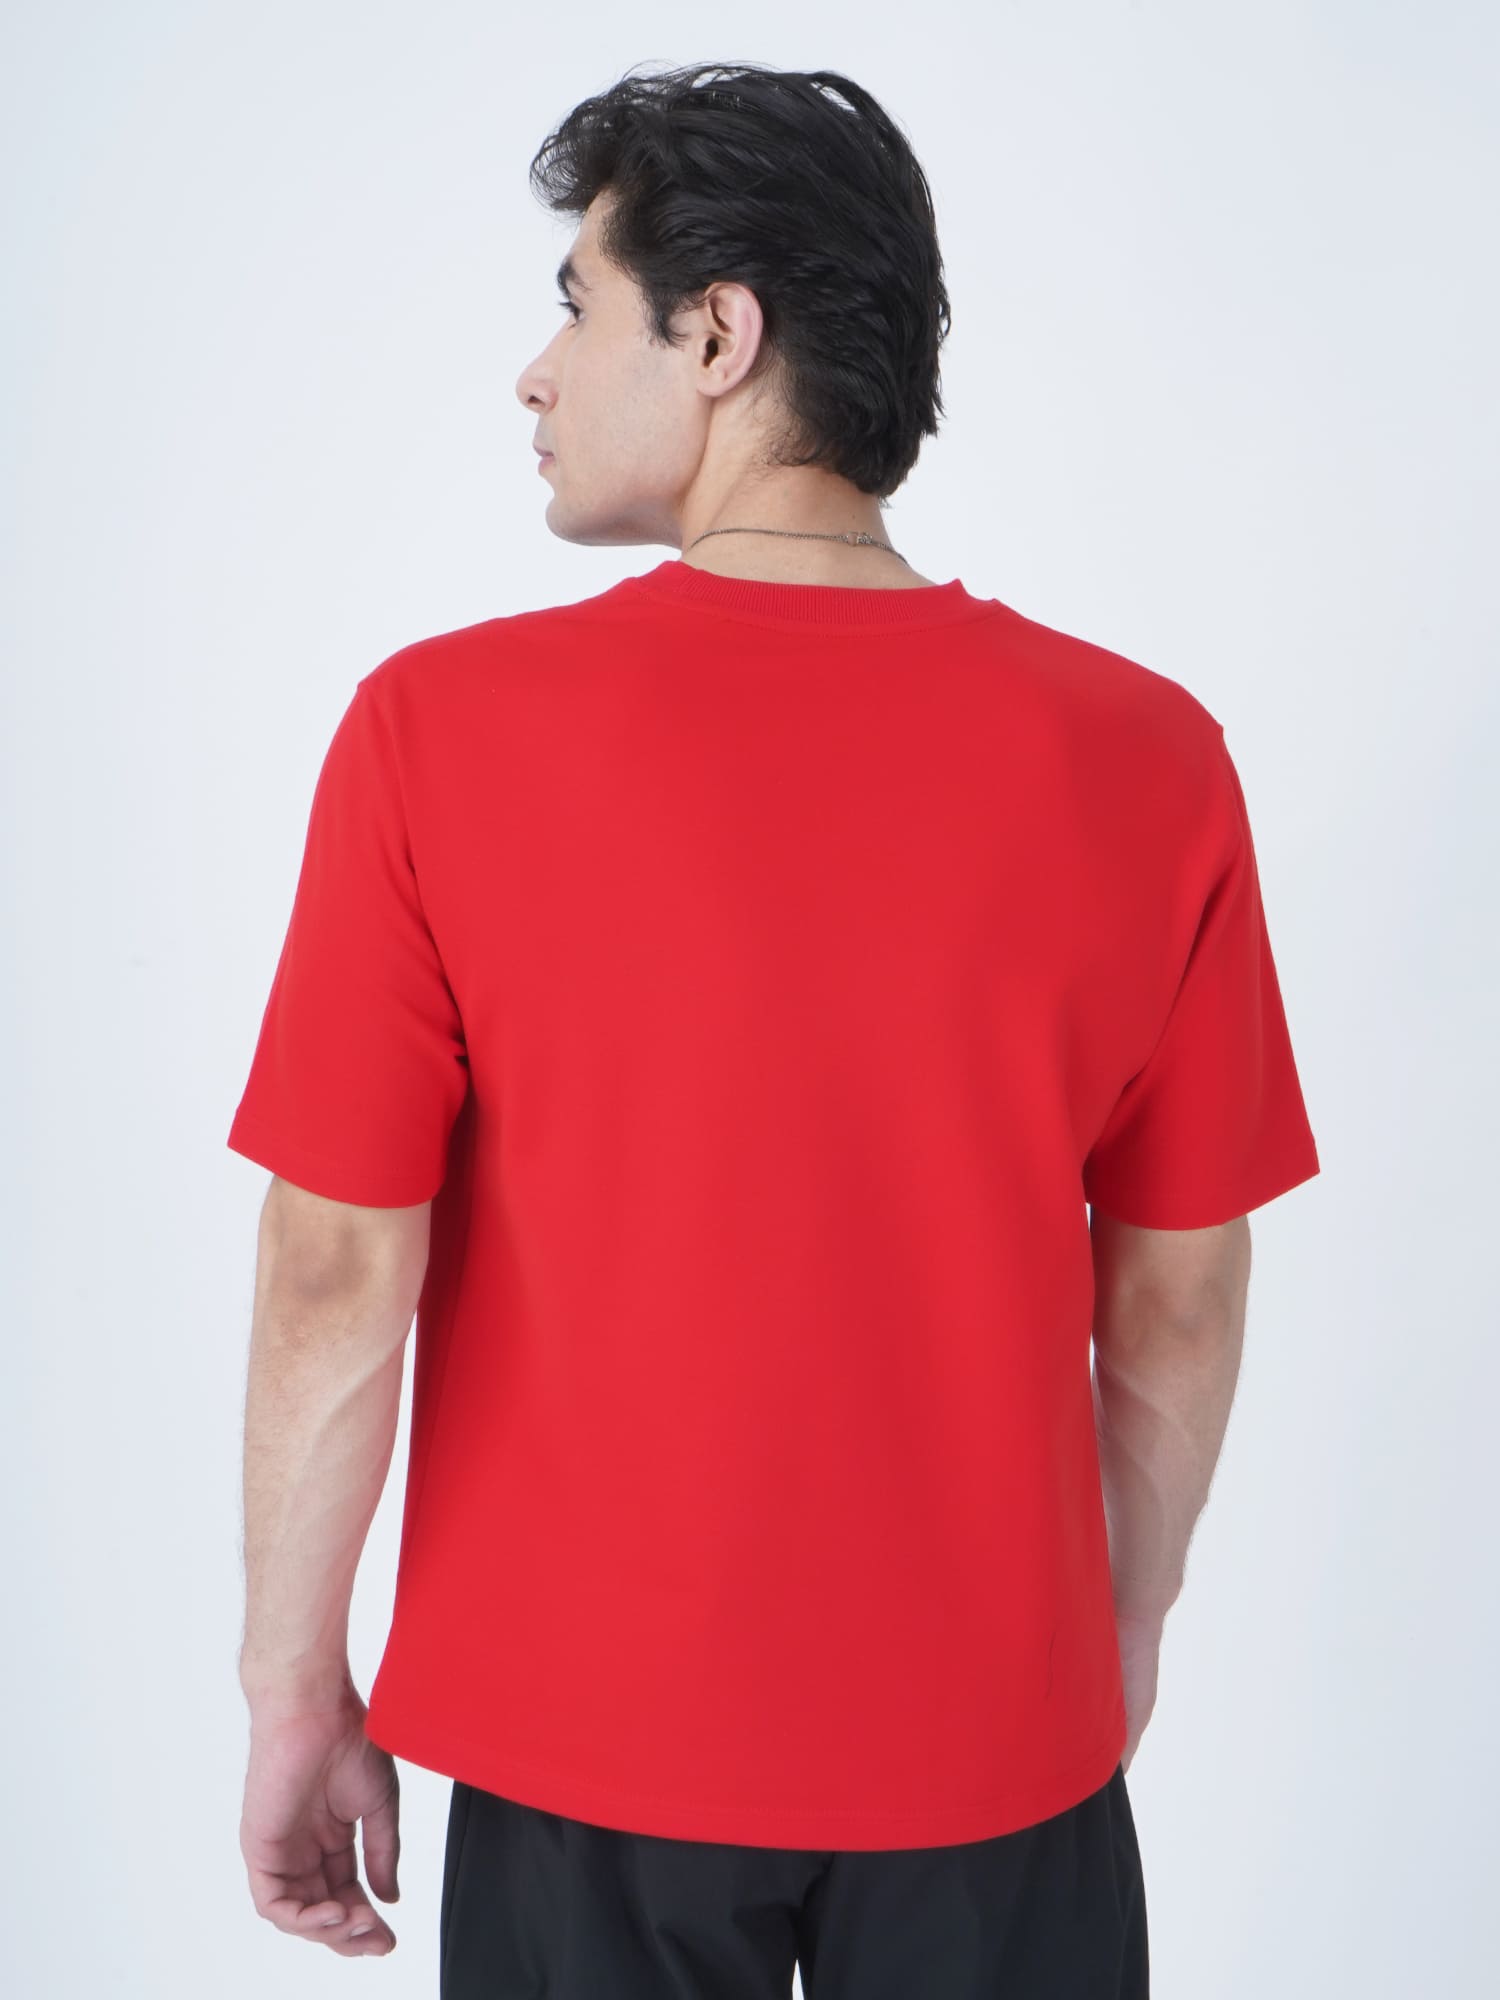 Jeffa Essential Oversized Tshirt Red